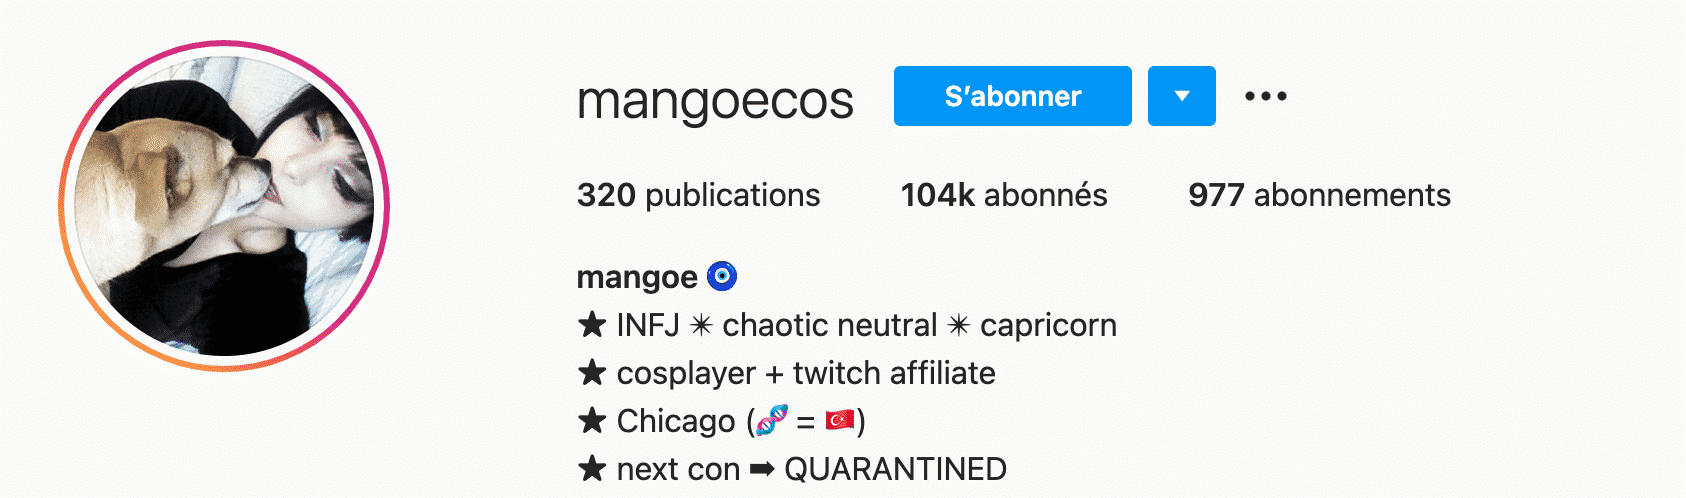 Instagram mangoecos